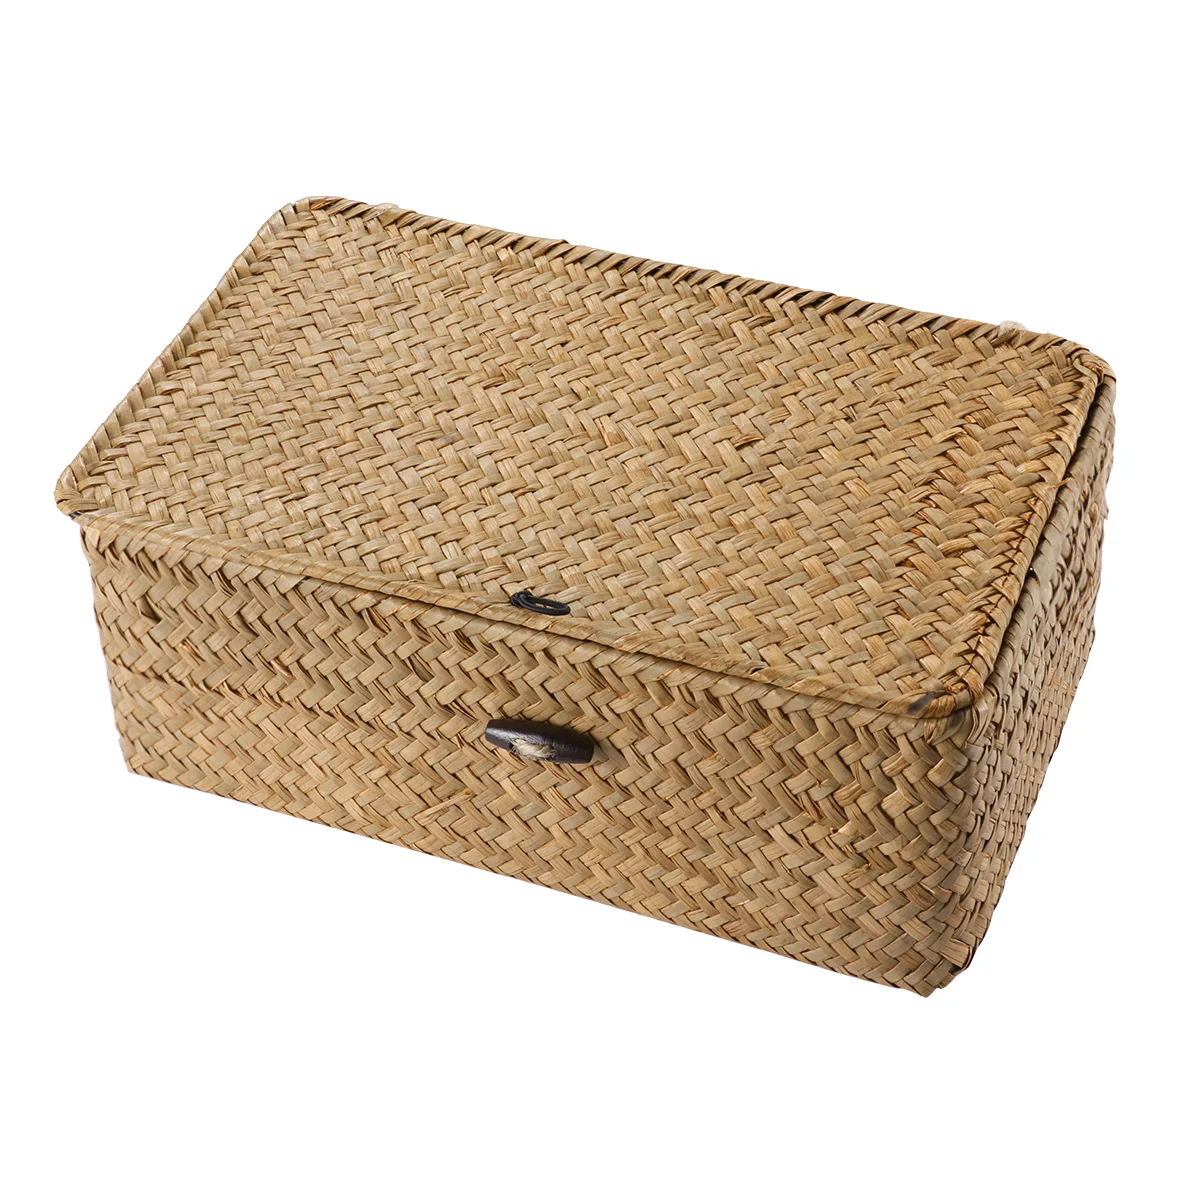 

Storage Basket Wovenbox Baskets Lid Desktop Lids Seaweedwicker Boxes Rattanhome Organizing Table Straw Decorative Shelves